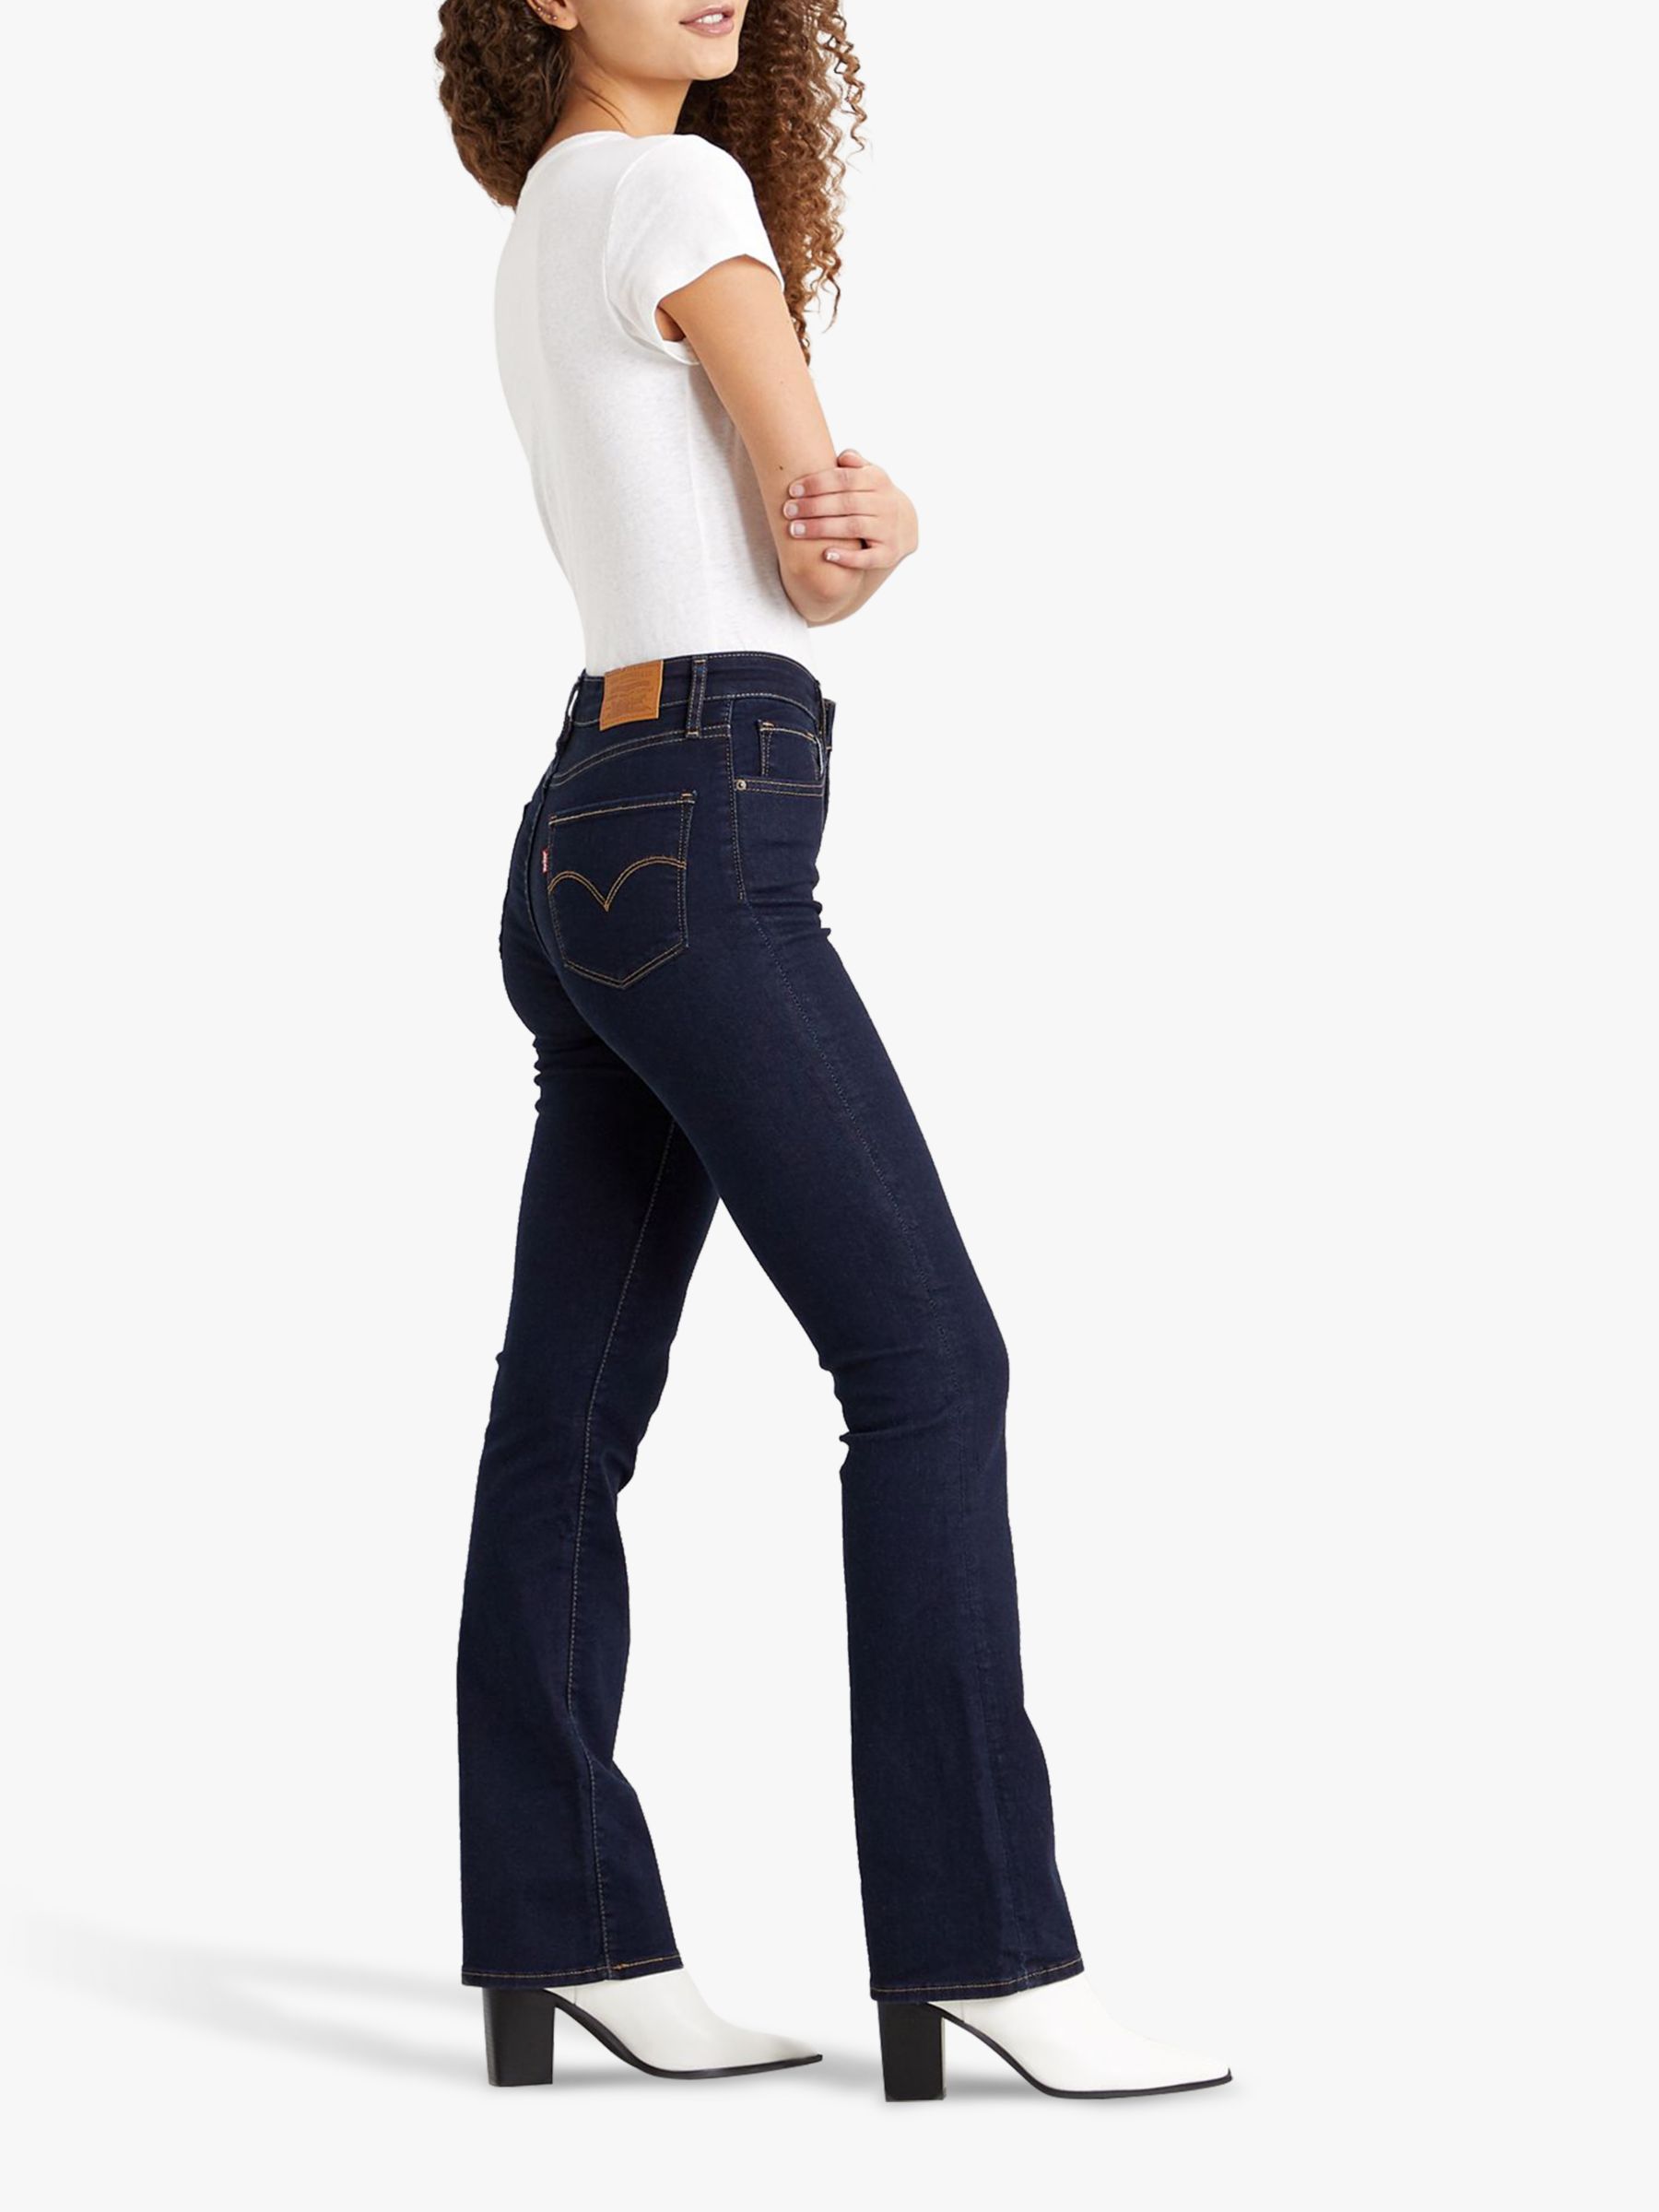 Top 81+ imagen levi bootcut women’s jeans